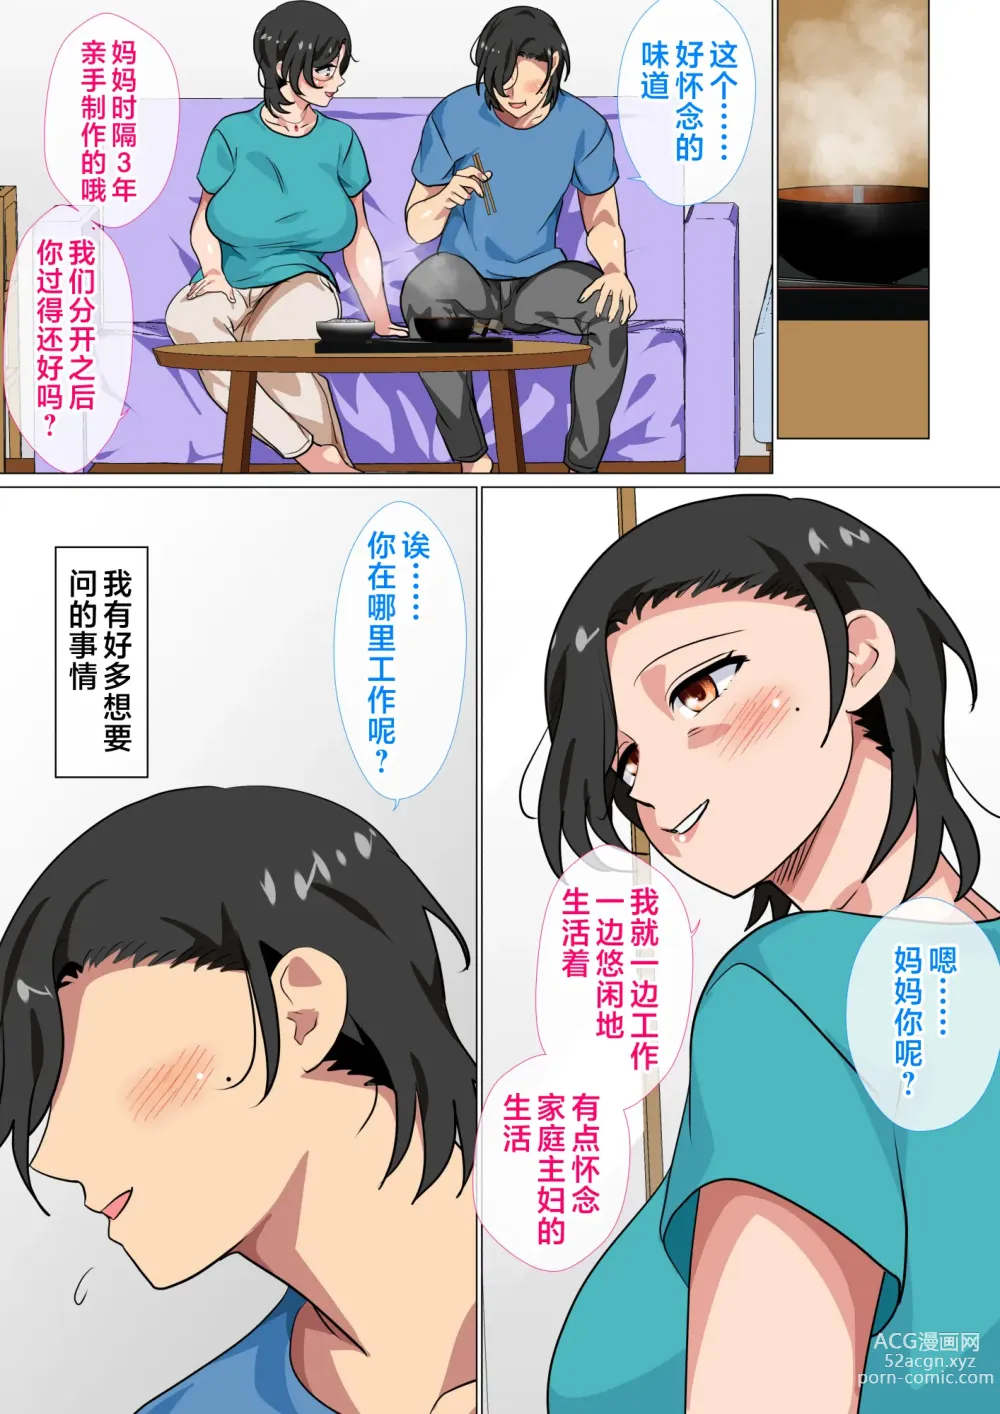 Page 11 of doujinshi 向母亲告白之后获得了仅有一天做爱的机会2